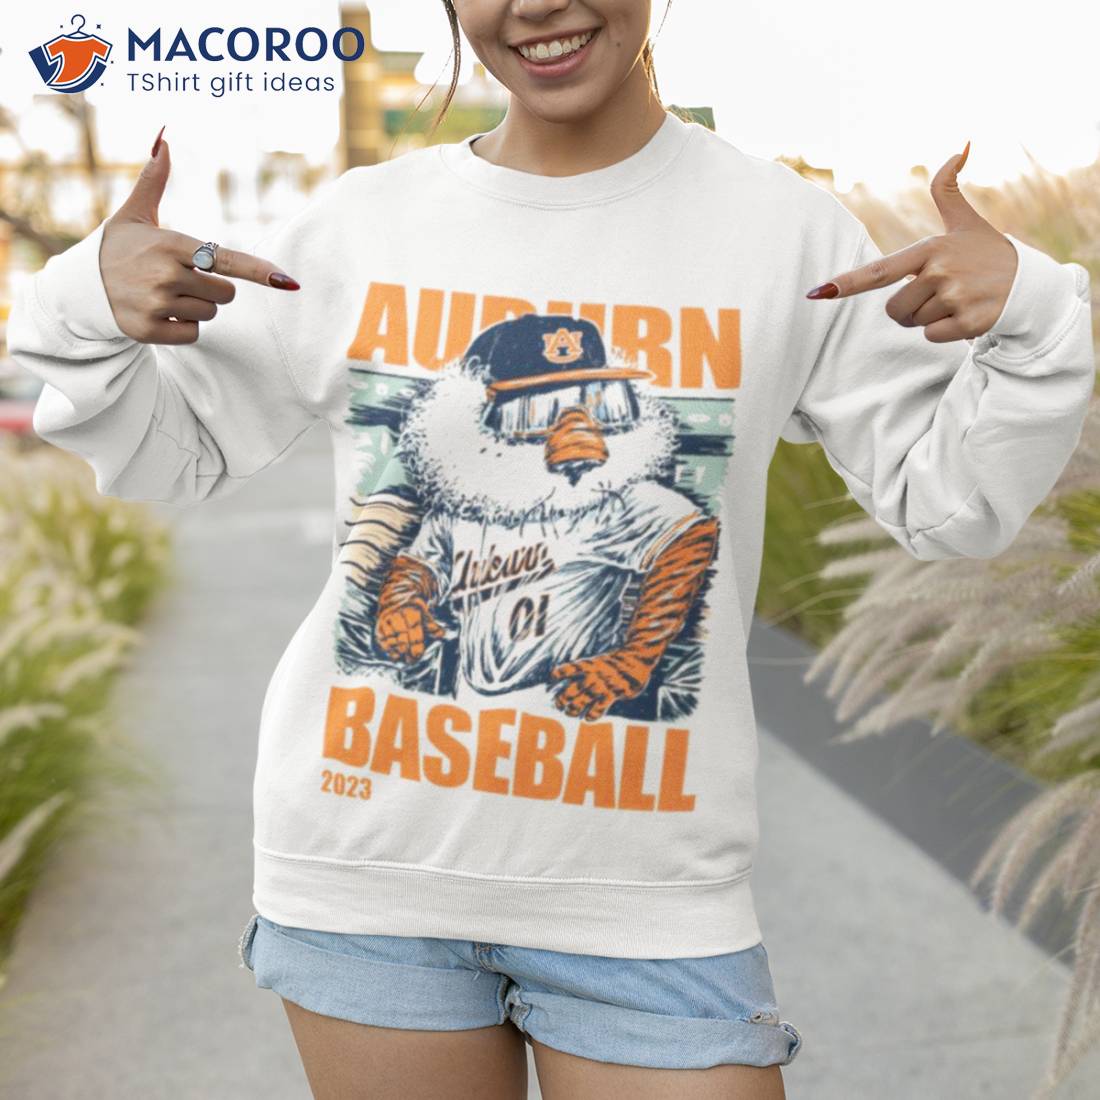 https://images.macoroo.com/wp-content/uploads/2023/04/auburn-tigers-baseball-2023-mascot-preorder-shirt-sweatshirt-1.jpg